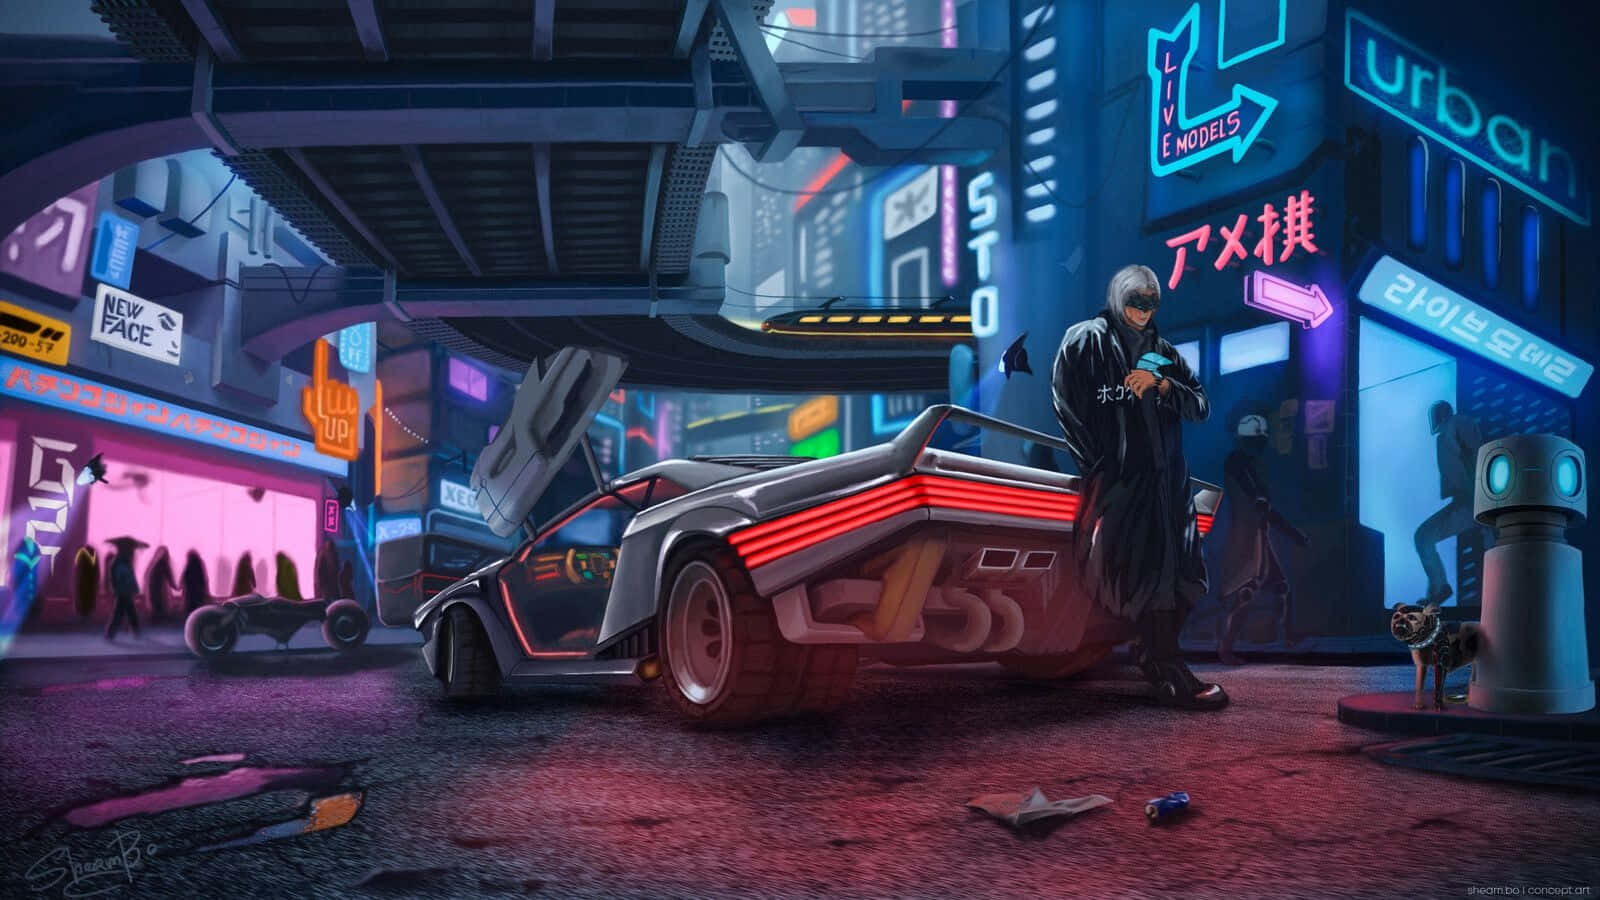 Cyberpunk_ Street_ Scene_with_ Futuristic_ Car_and_ Figure Wallpaper